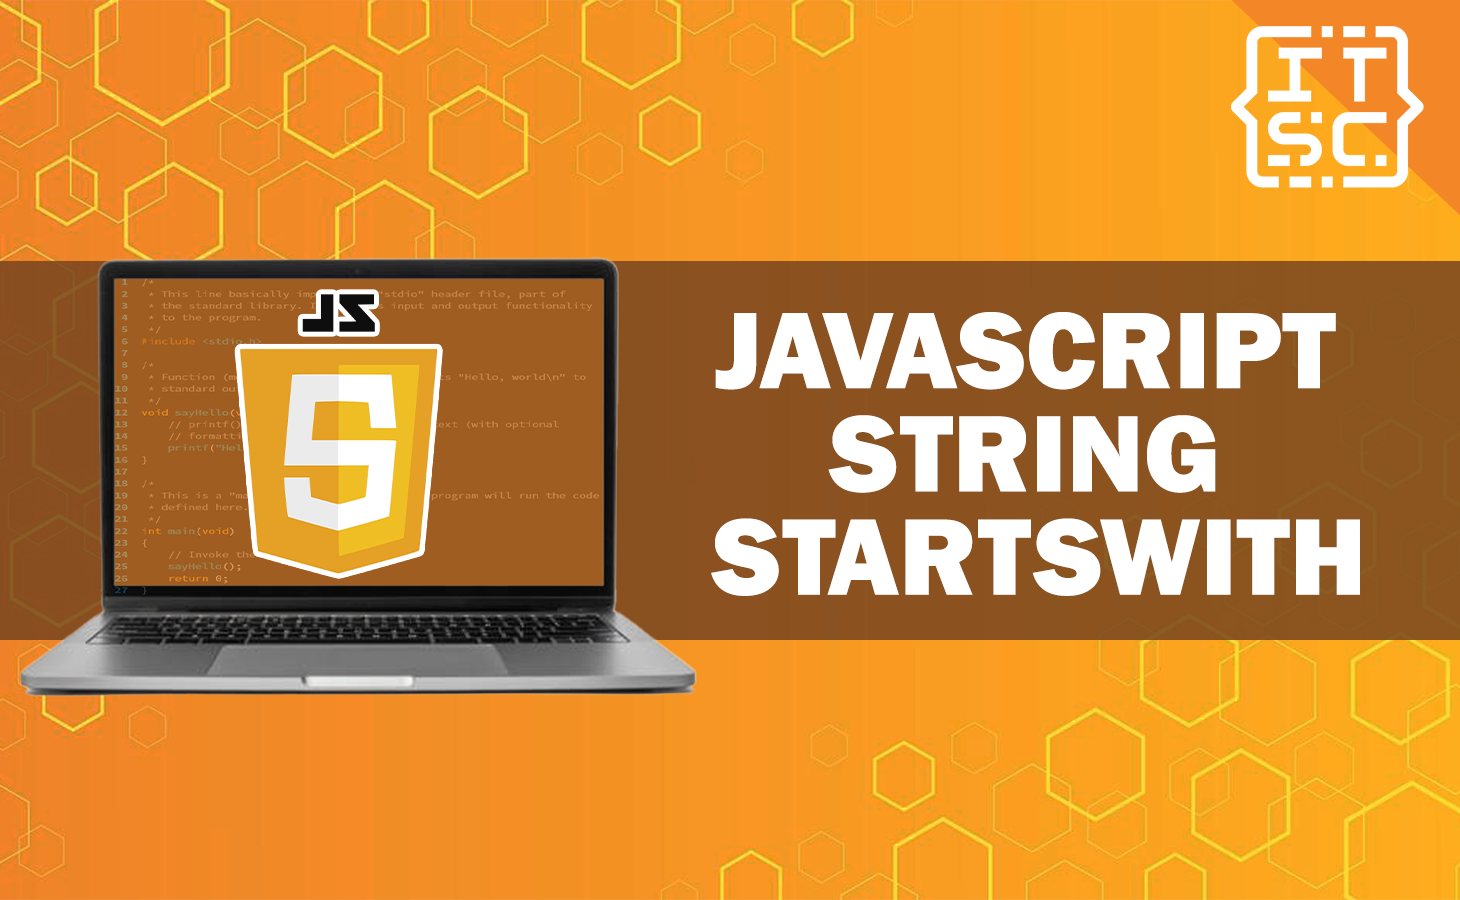 JavaScript string startswith